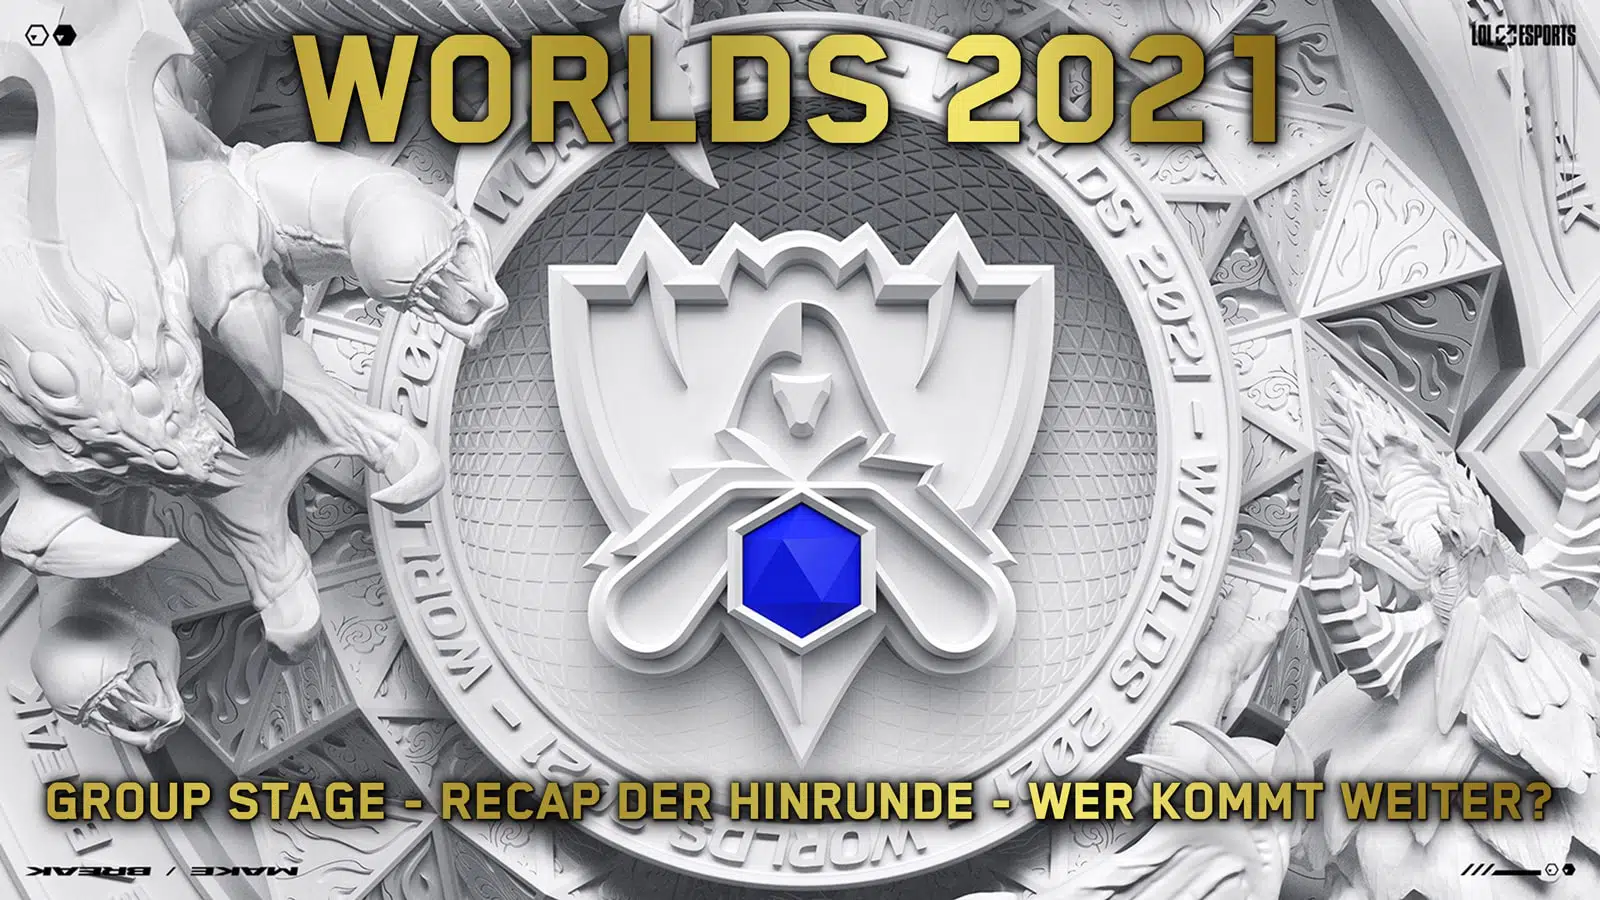 worlds 2021 group stage hinrunde recap